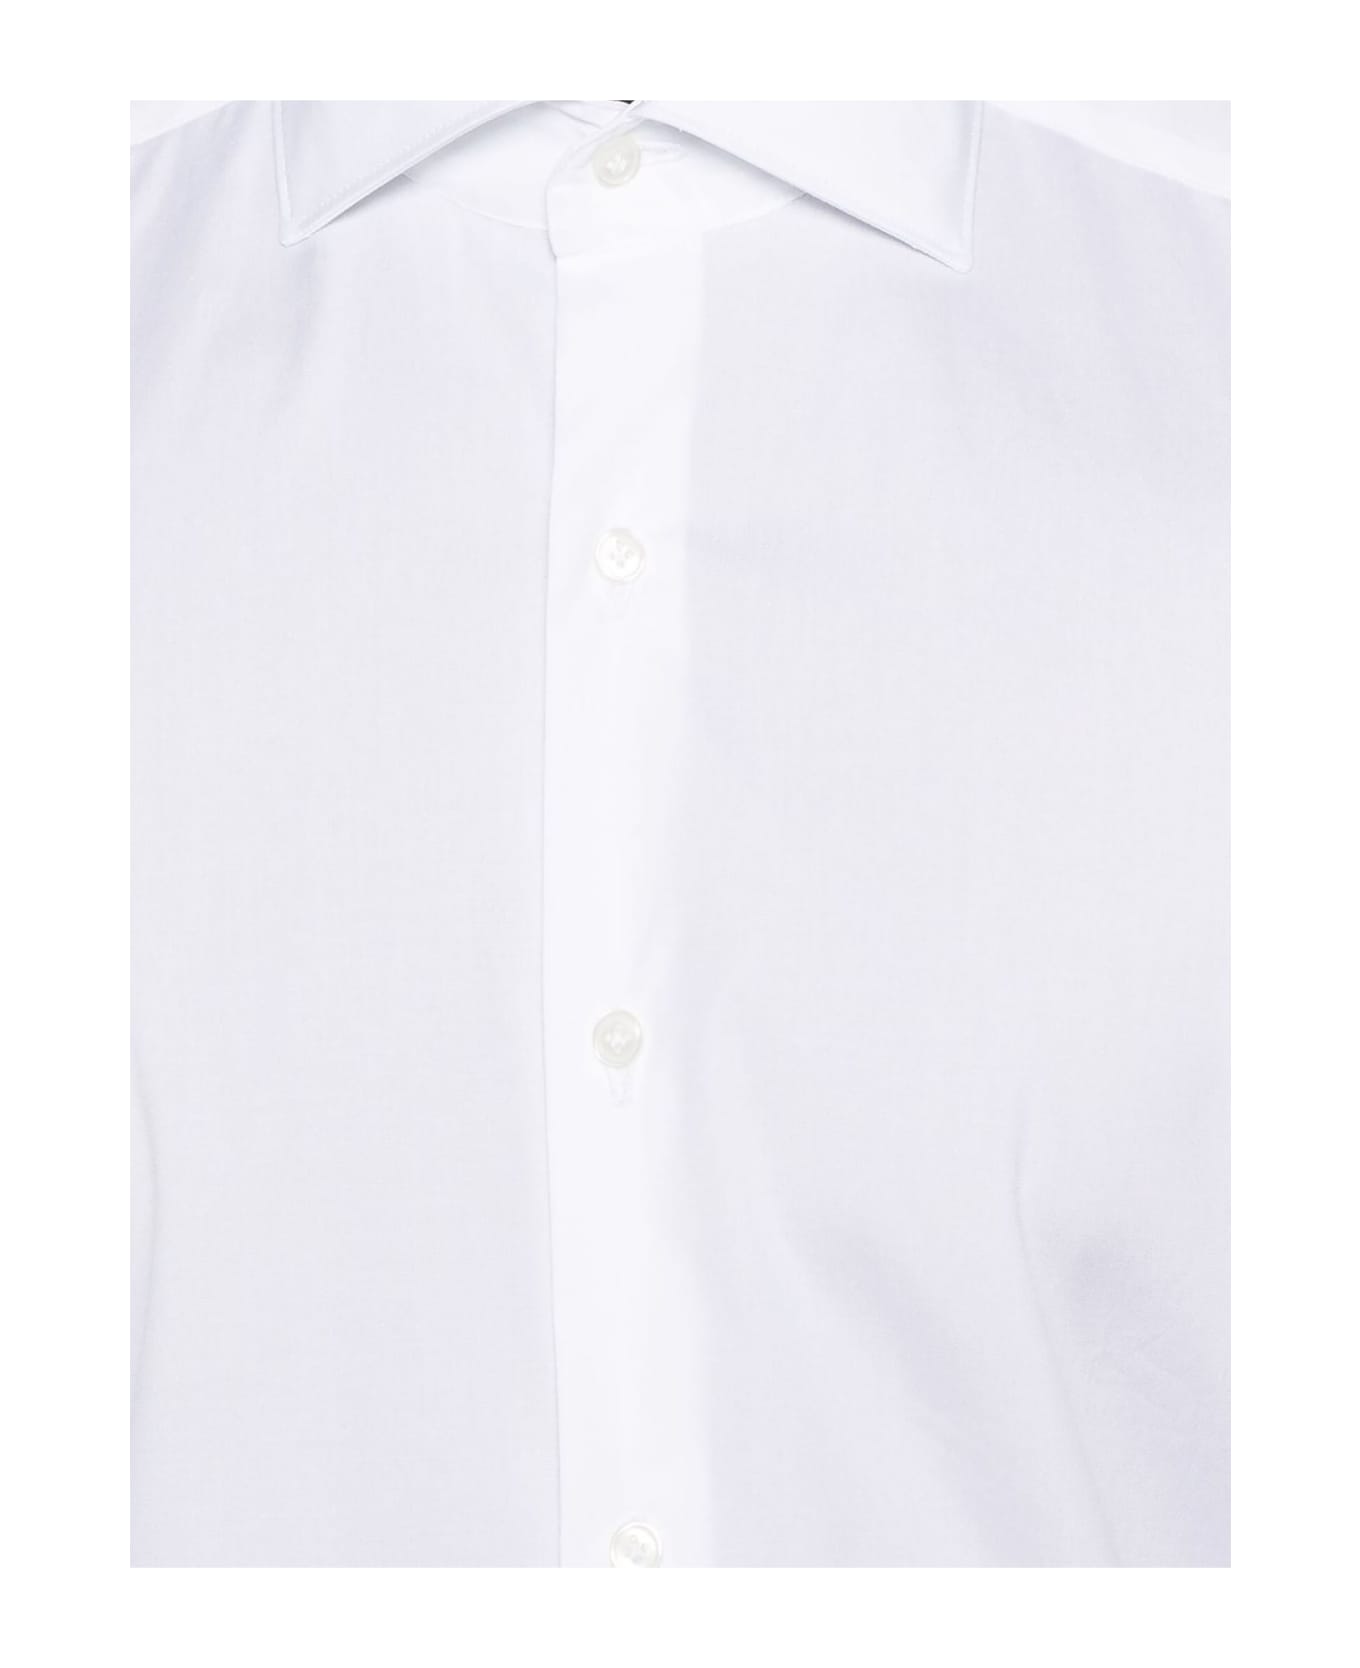 Fay White Cotton Blend Shirt - White